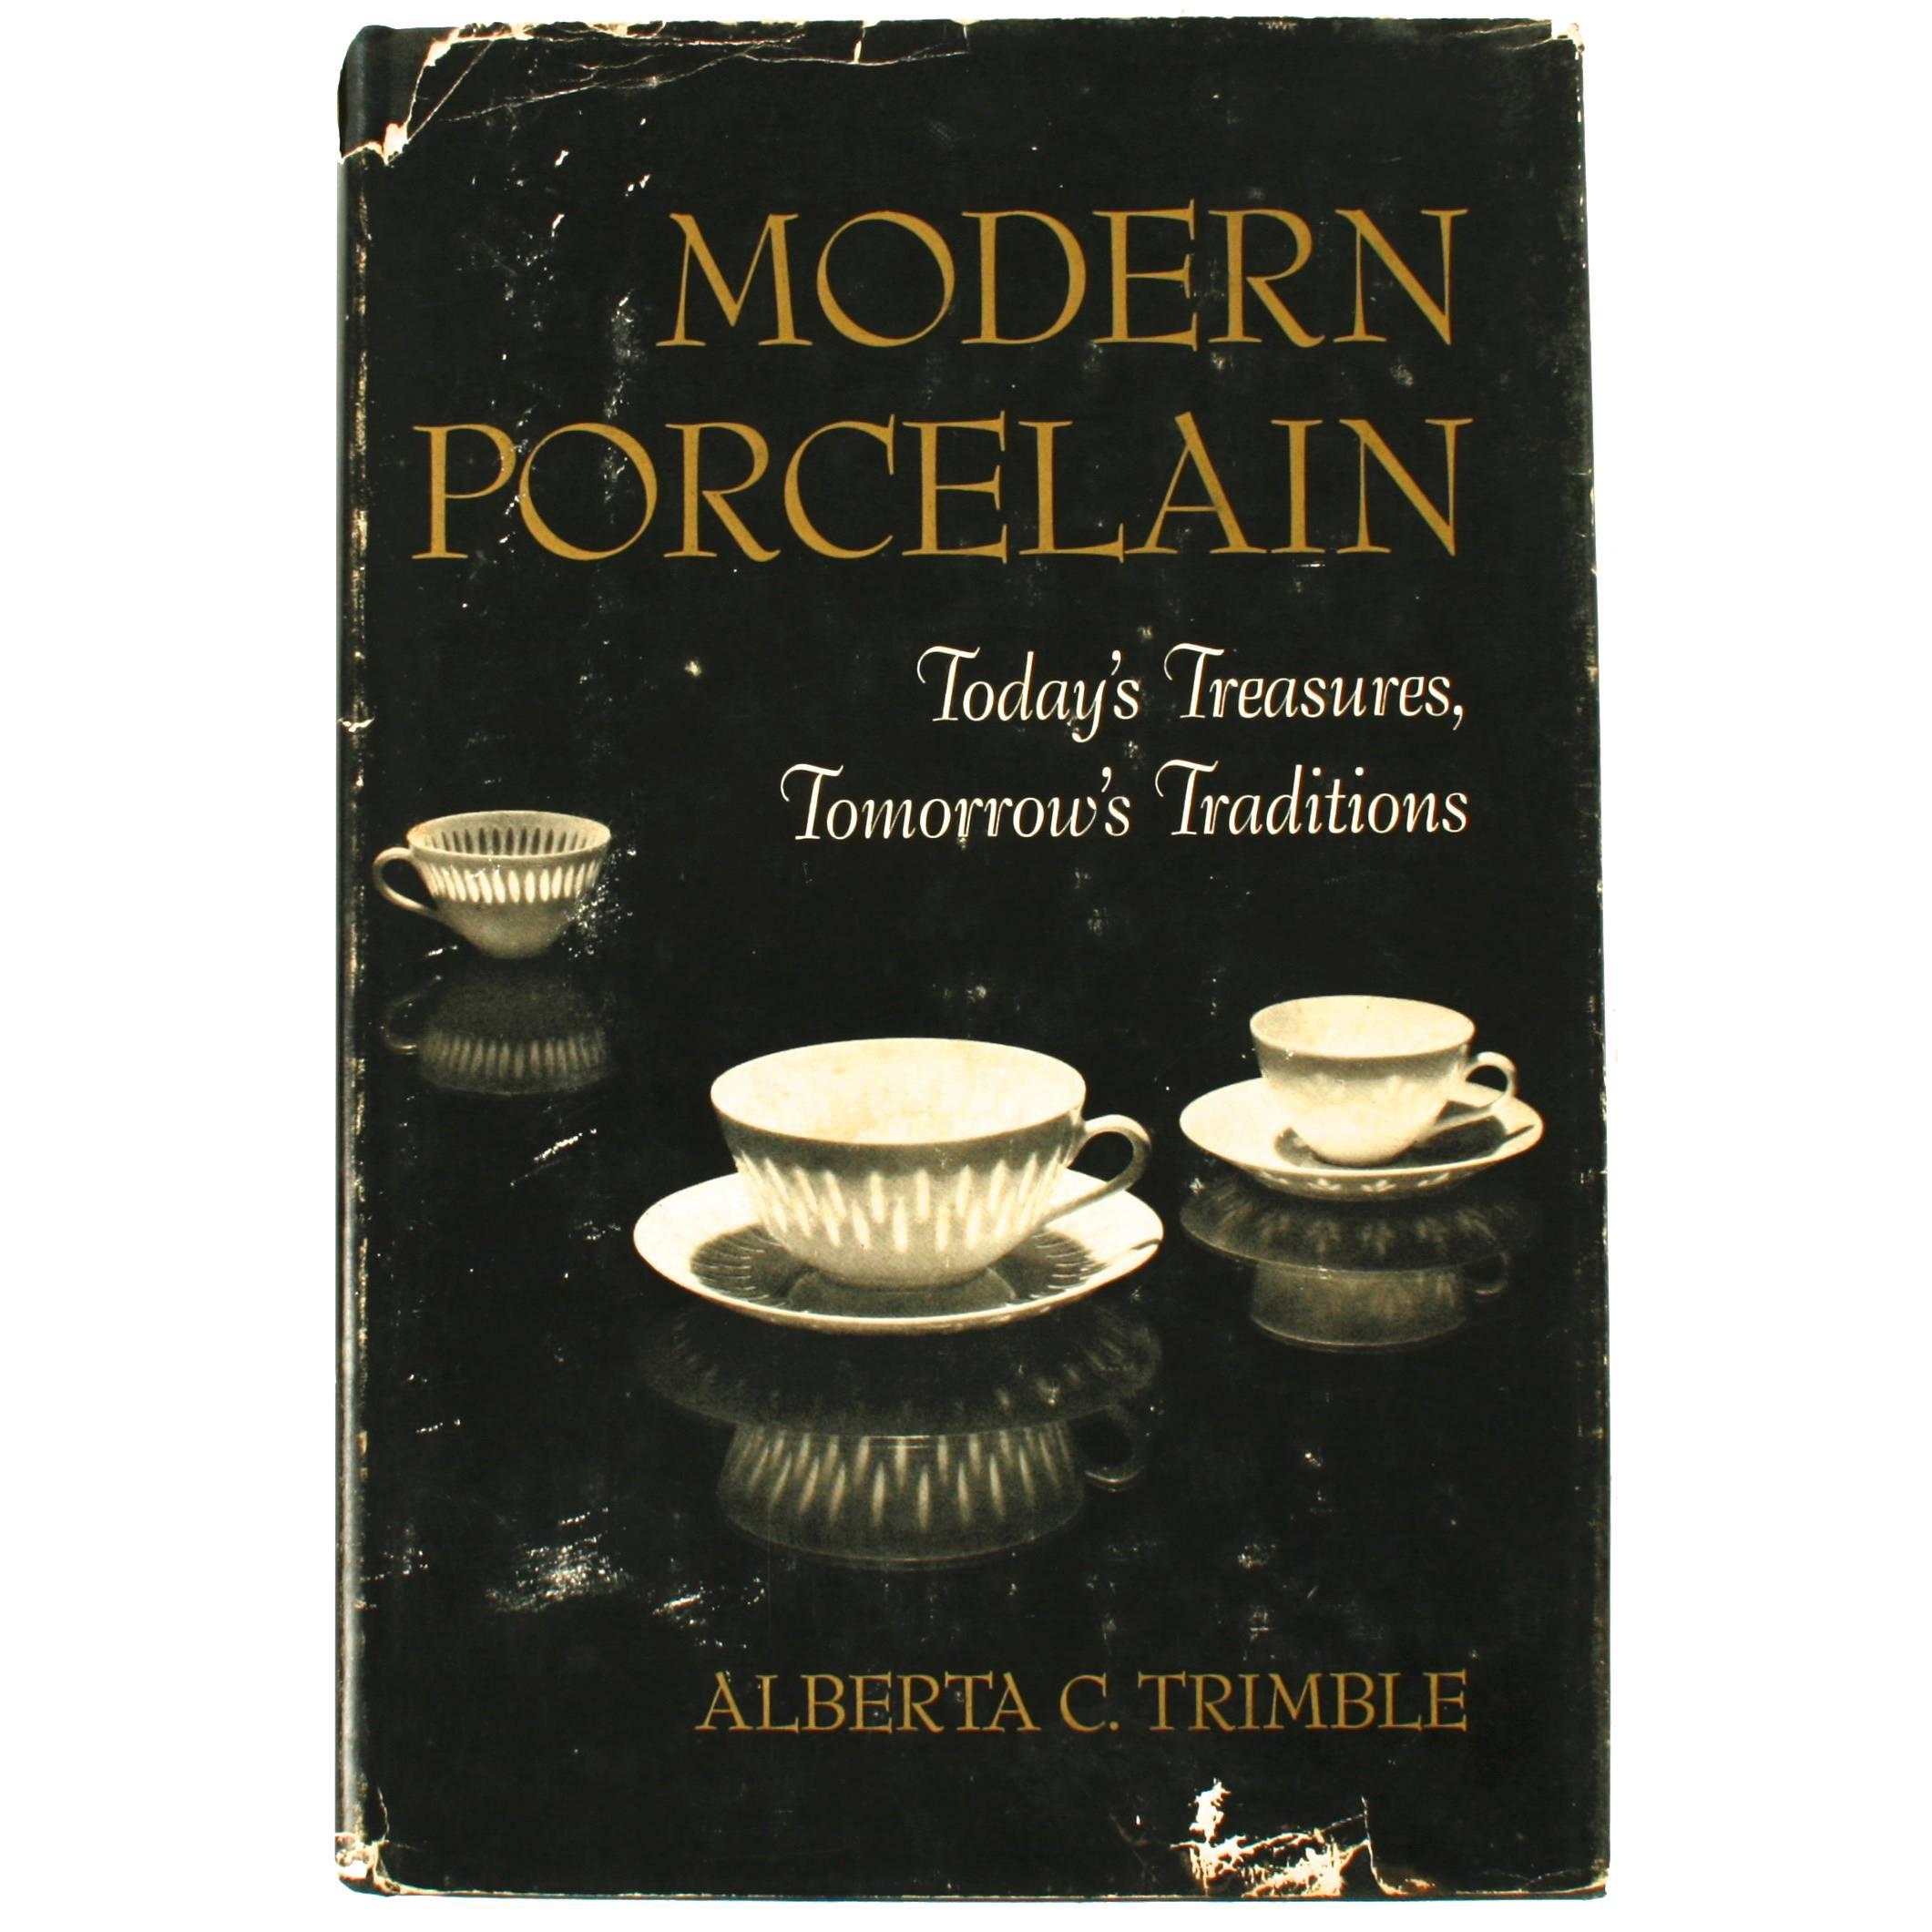 Modern Porcelain by Alberta C. Trimble, First Edition